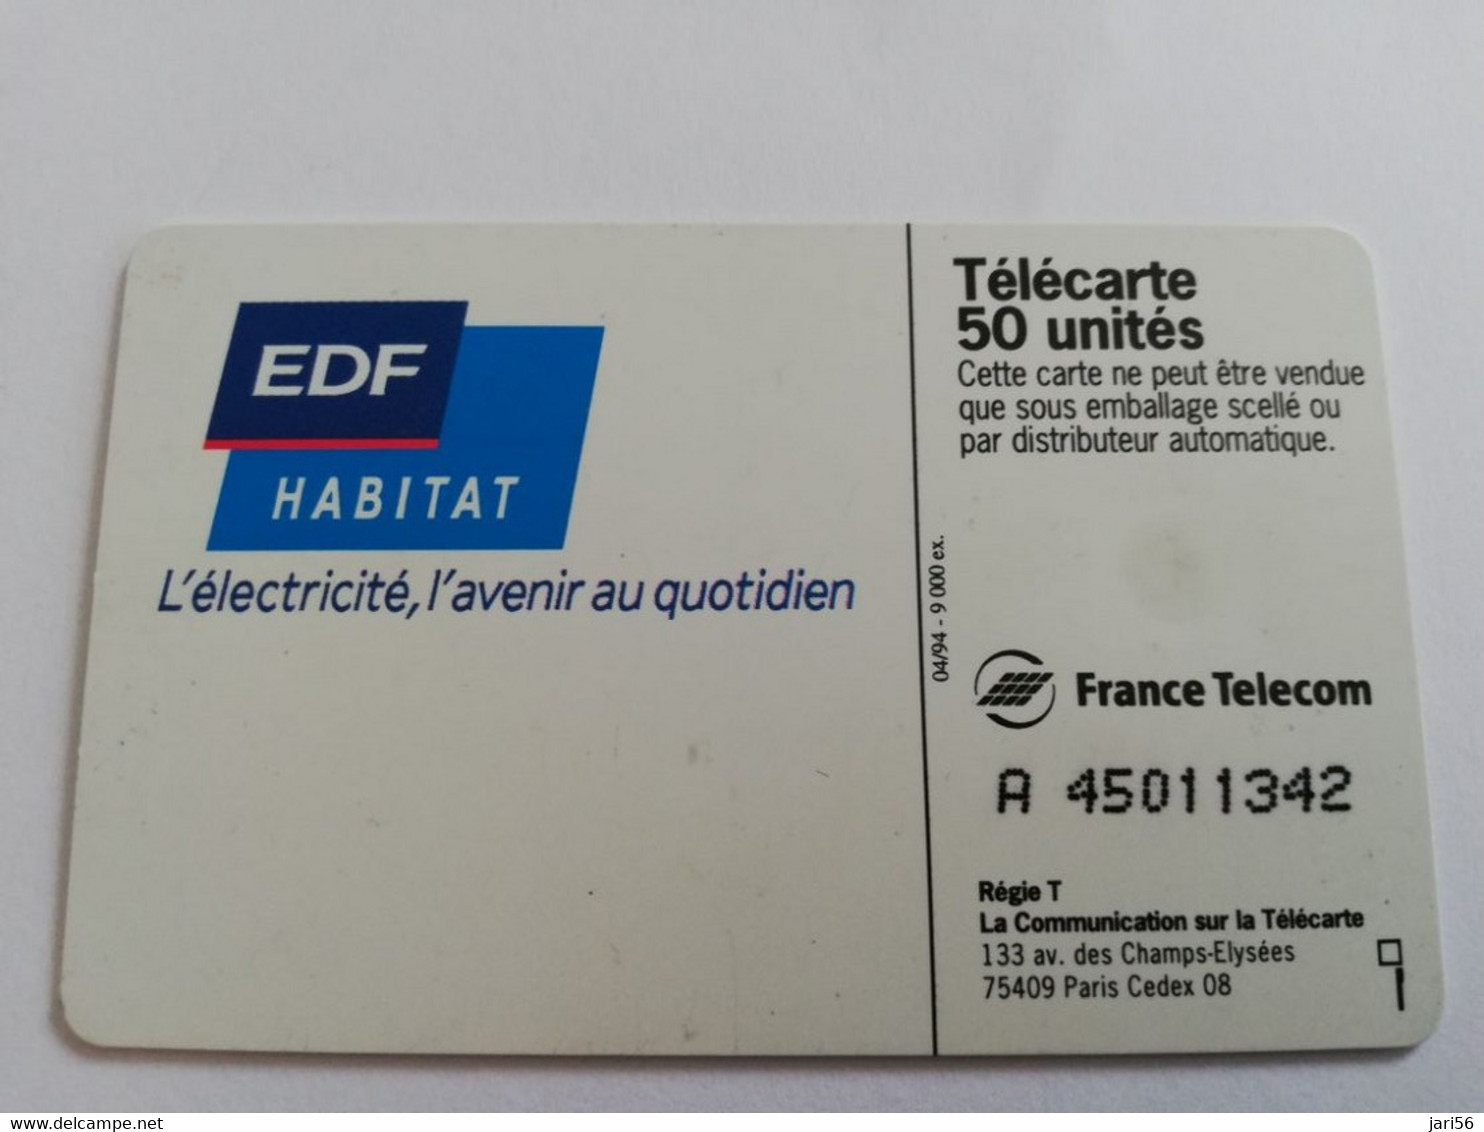 FRANKRIJK  50 UNITS UPCE 94 / EDF HABITAT  TIRAGE  9000X   USED CARD **9445** - Phonecards: Private Use